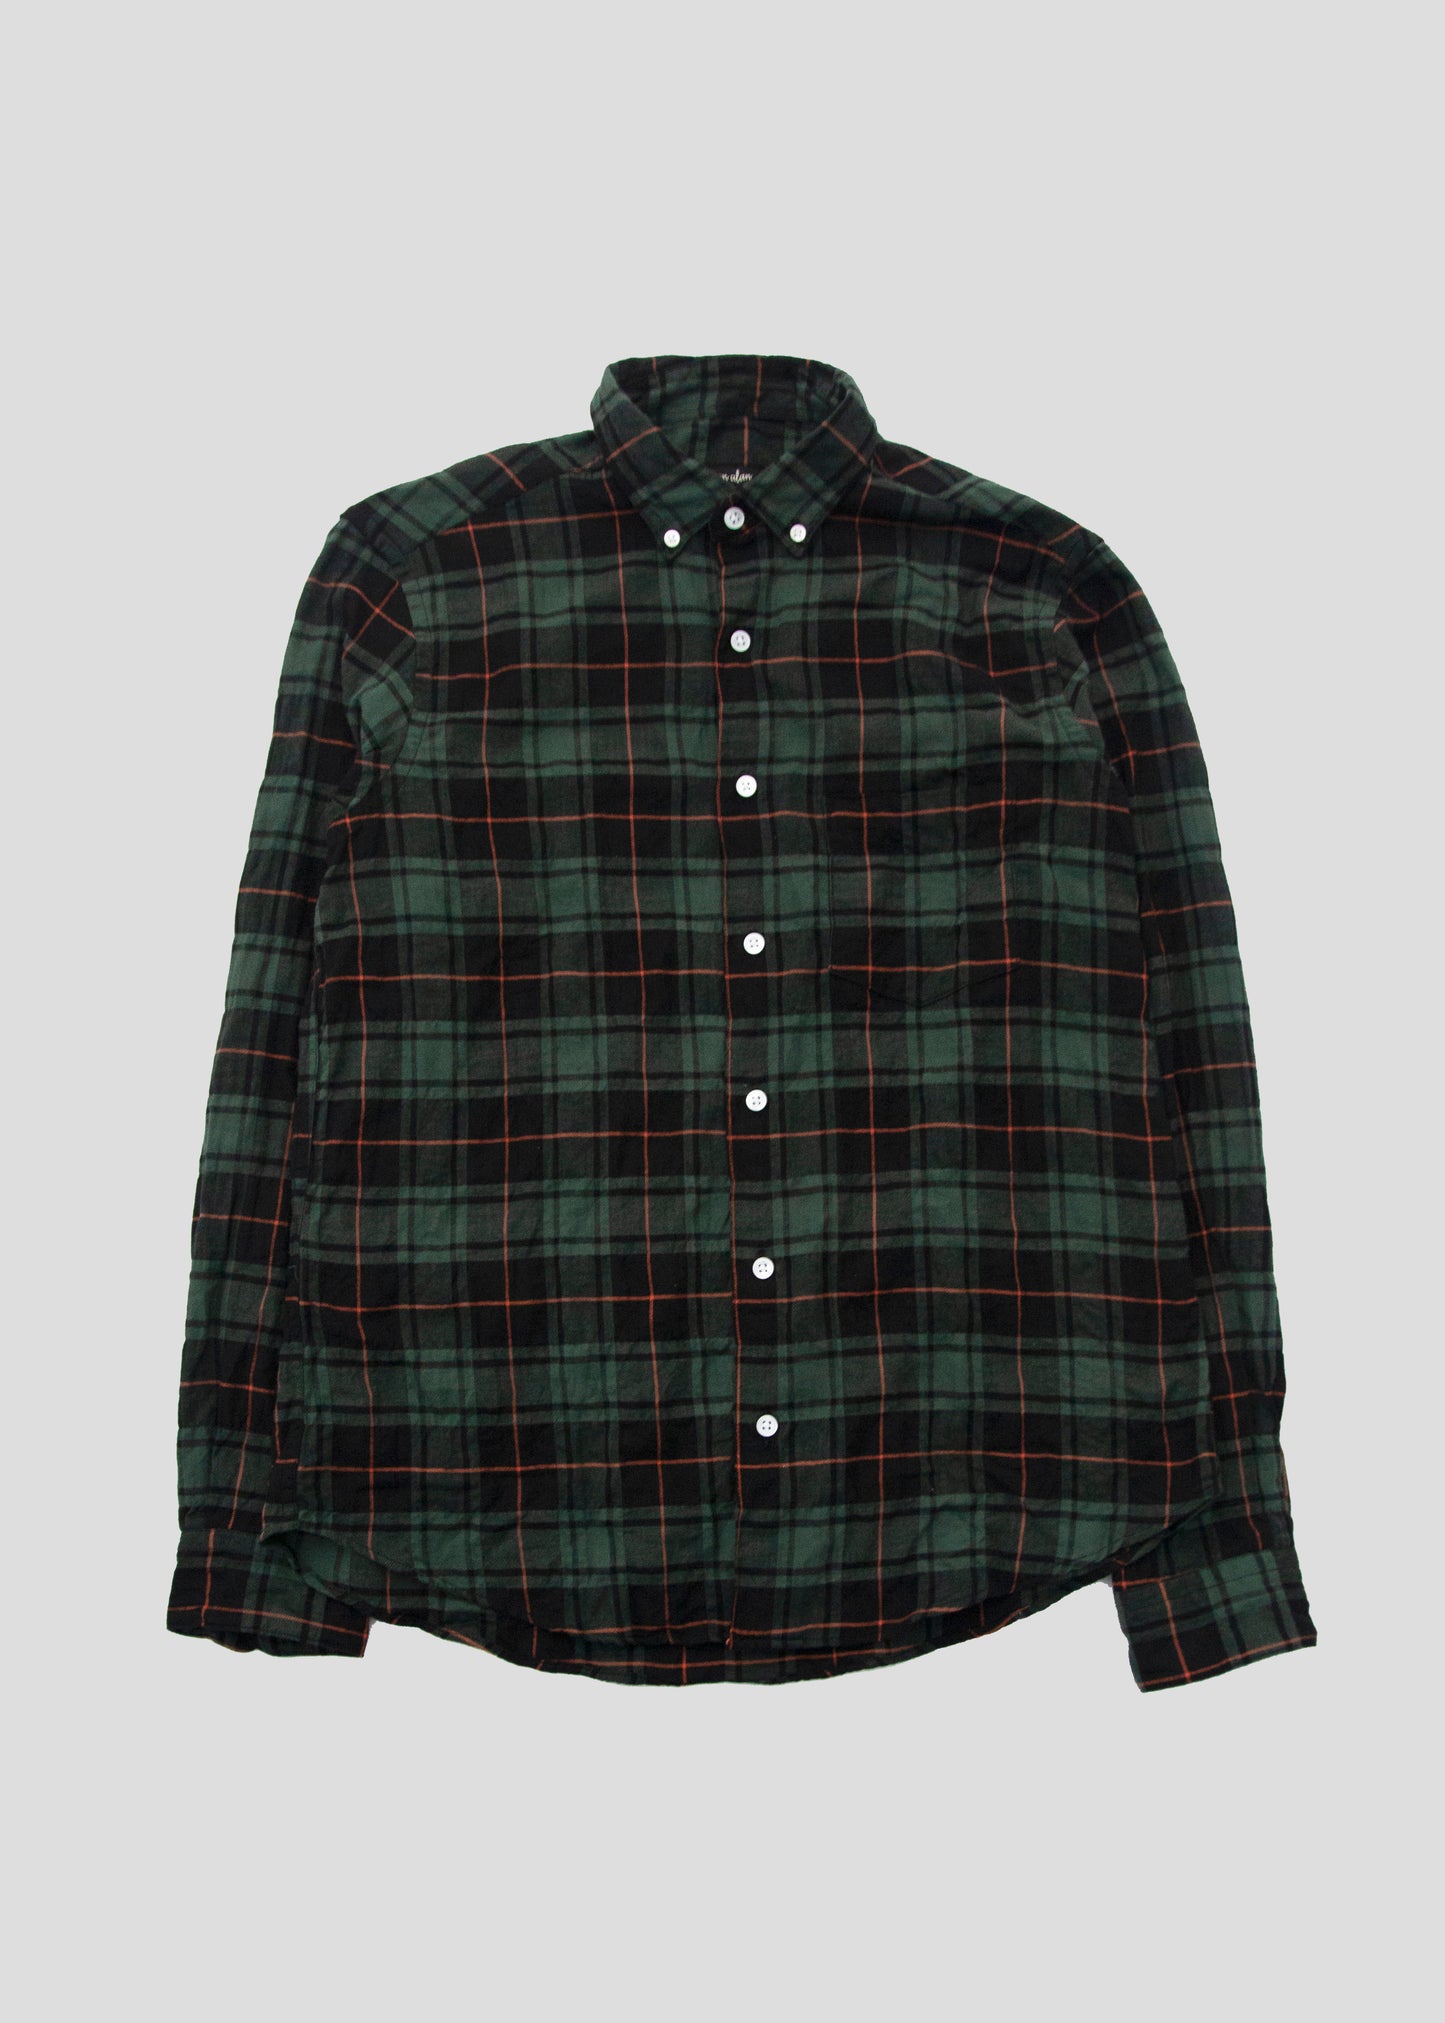 Single Needle Shirt, Green Pucker Flannel